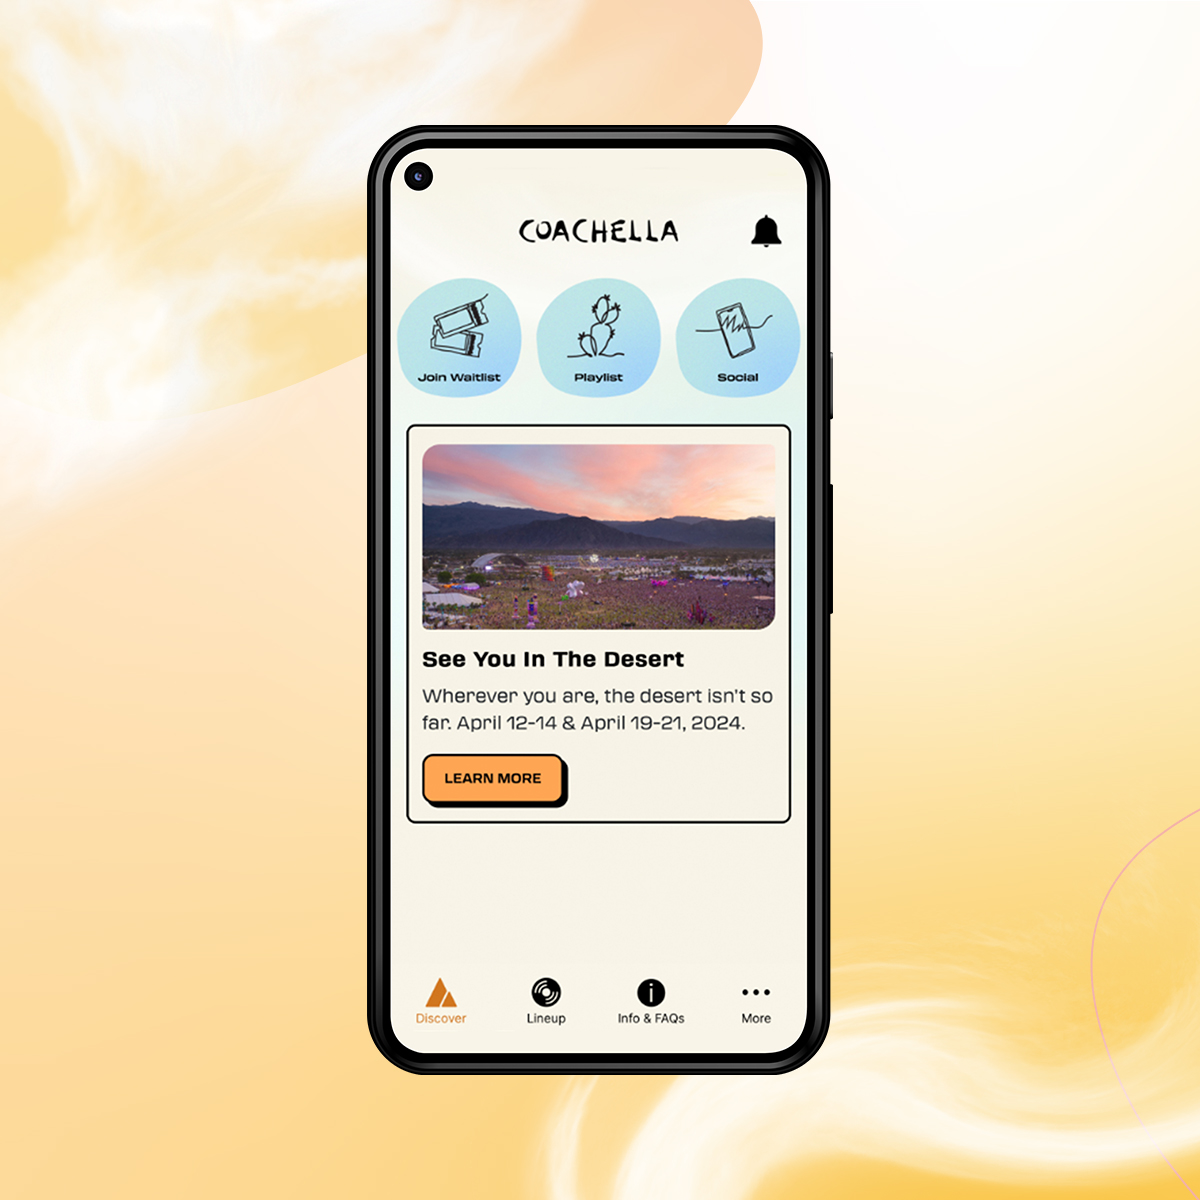 Phone showing Coachella app